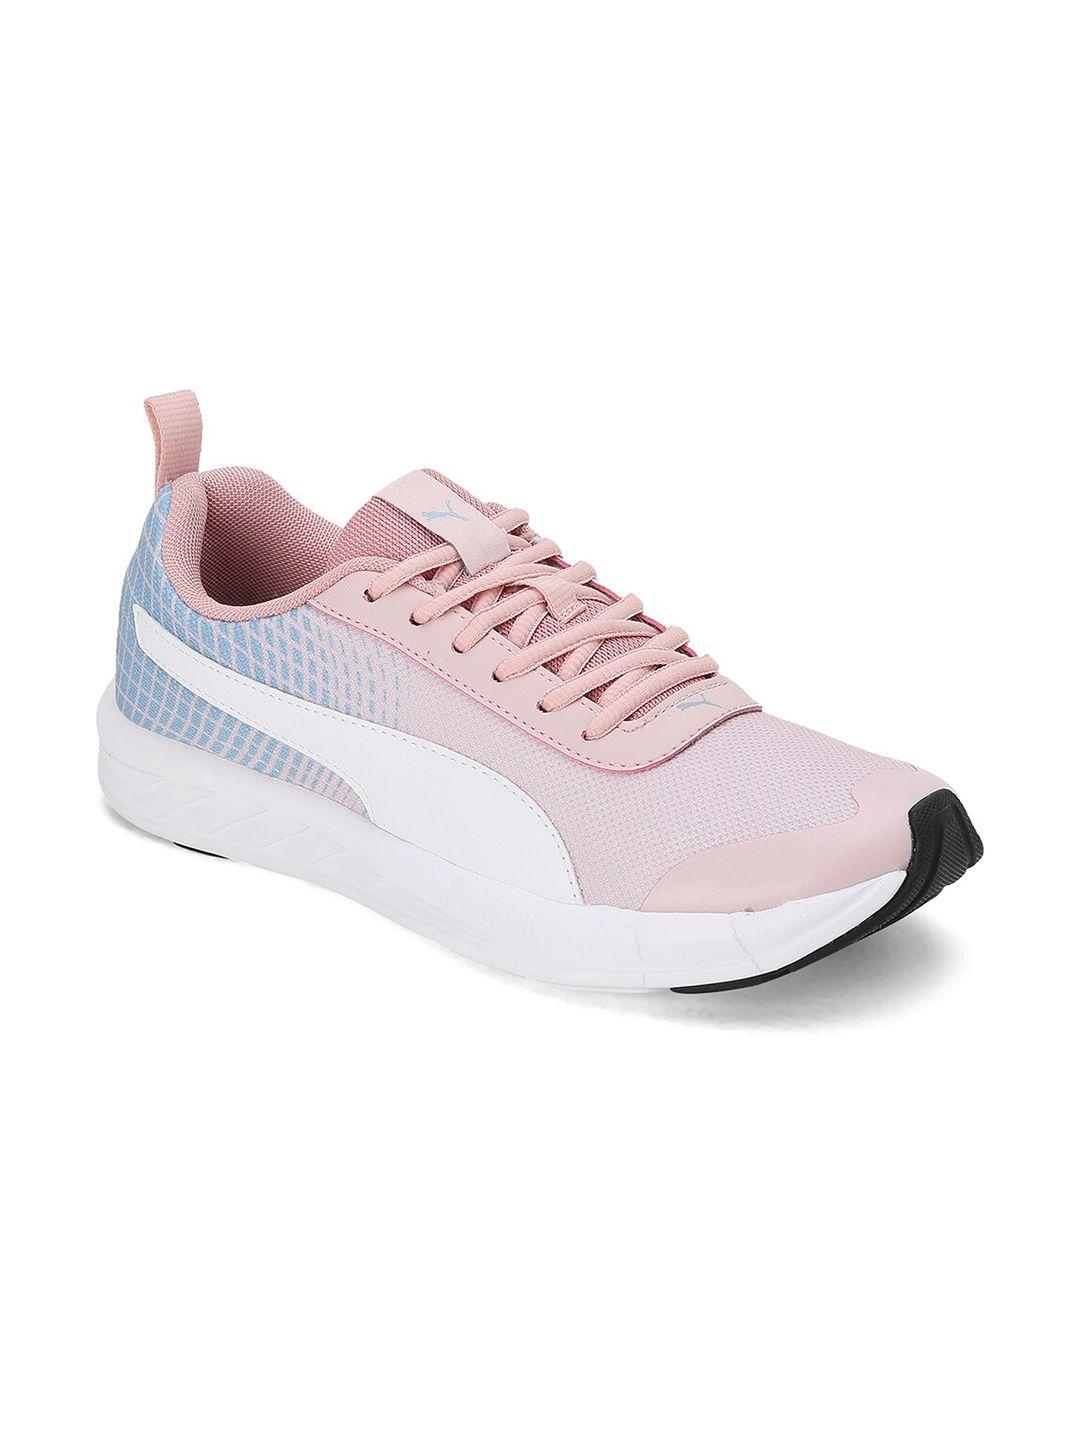 puma-women-pink-textile-supernal-v3-running-shoes